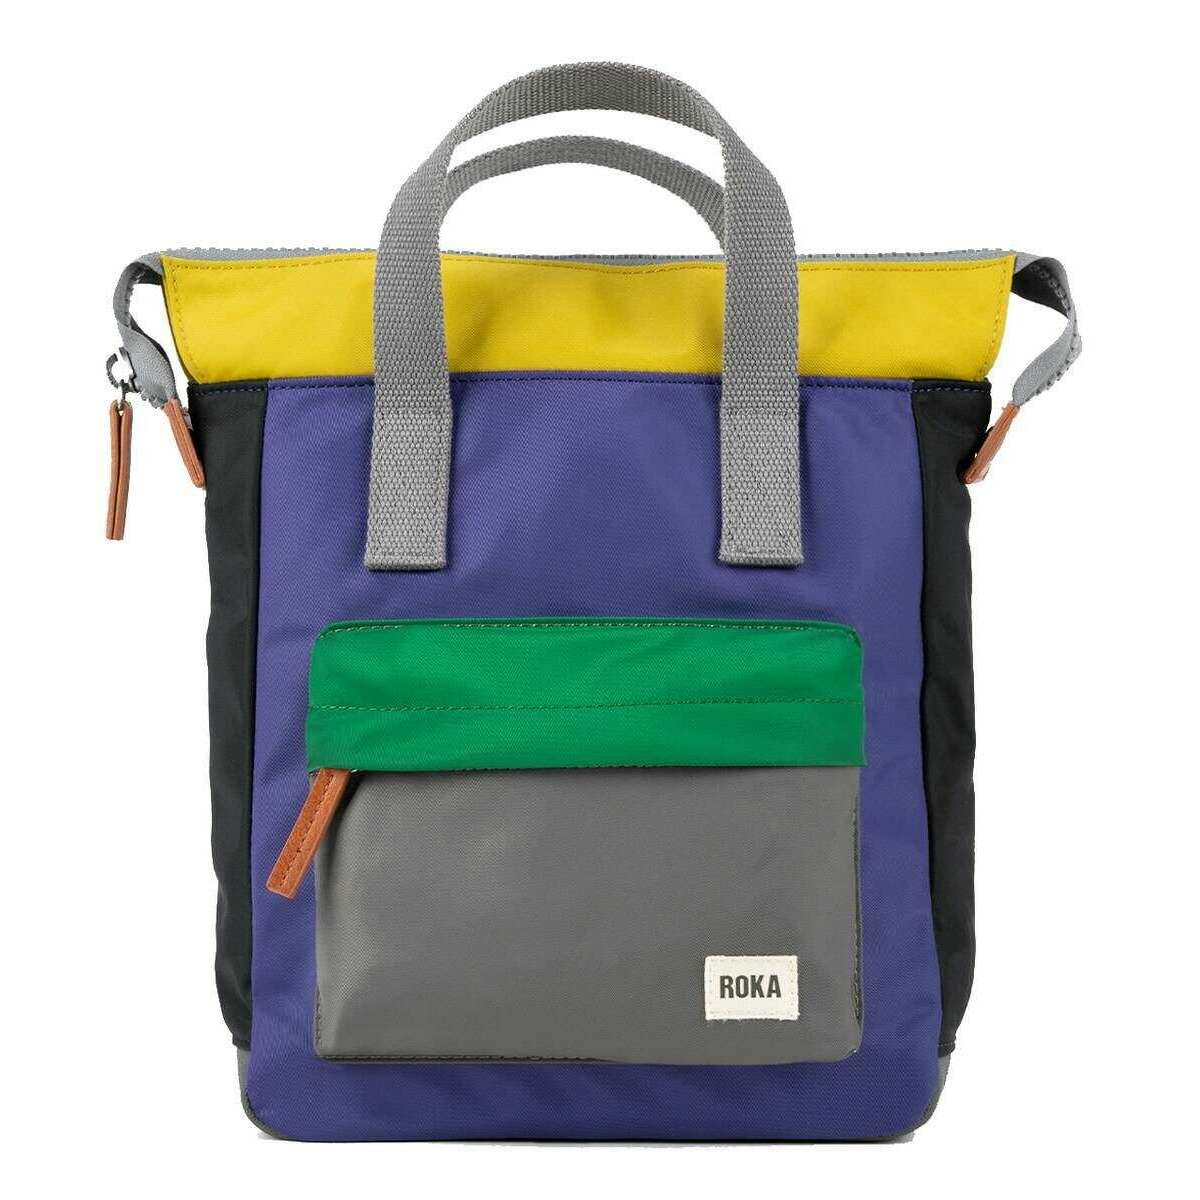 Roka Bantry B Small Creative Waste Colour Block Recycled Nylon Backpack - Purple/Yellow/Green